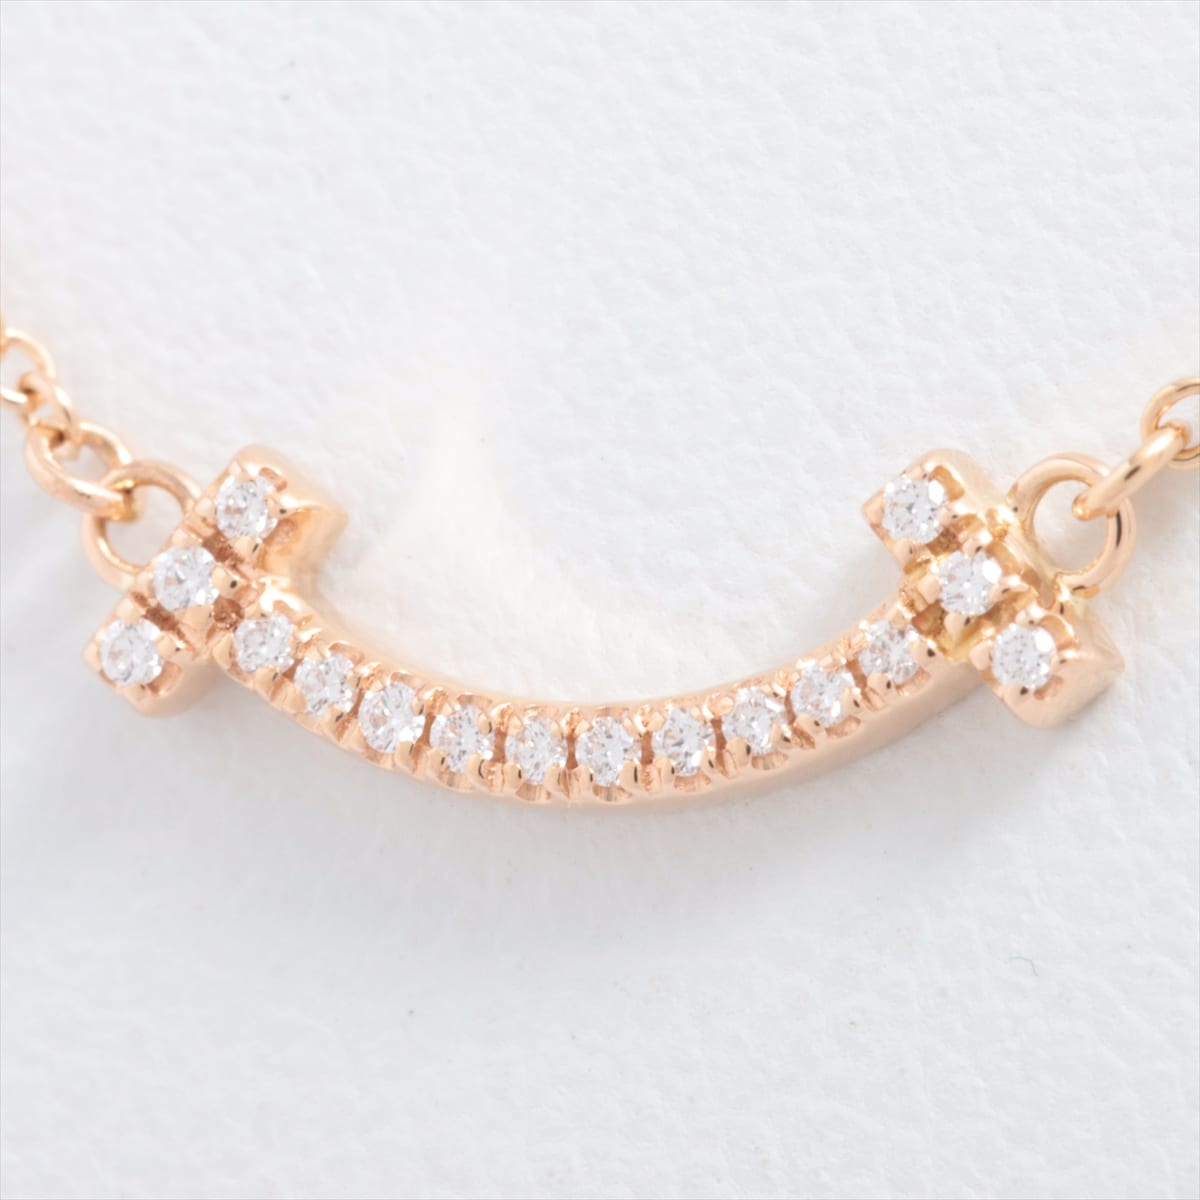 Tiffany T Smile Micro diamond Necklace 750 PG 2.1g